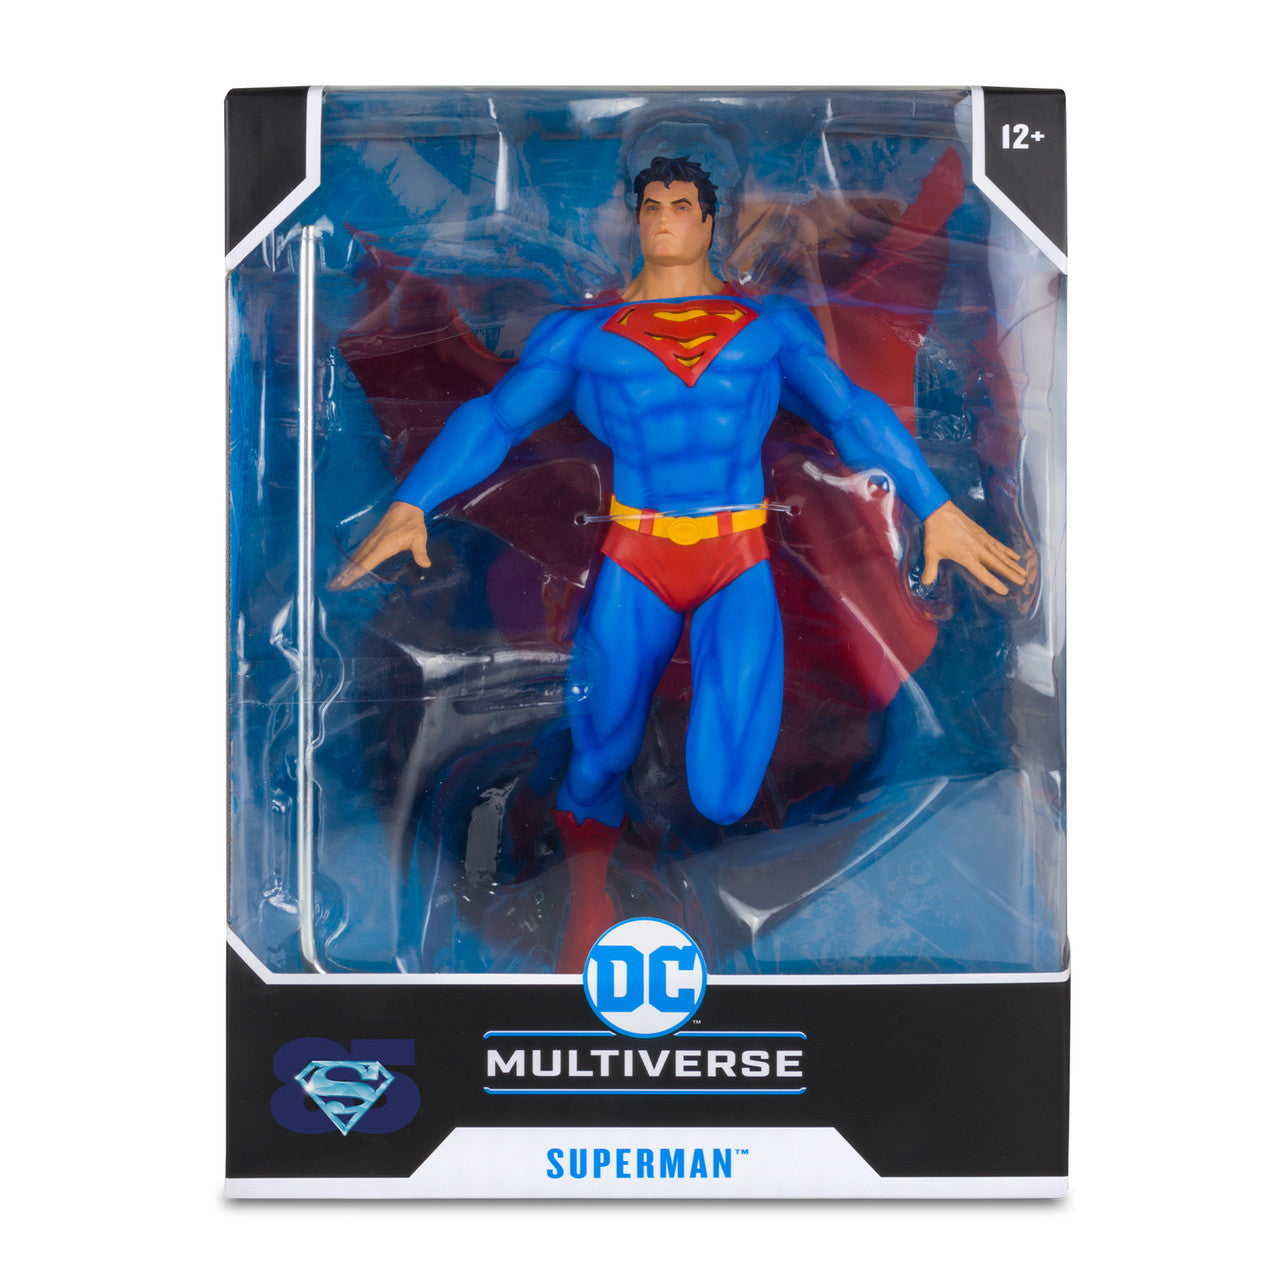 Superman for Tomorrow (DC Multiverse) 12" Statue